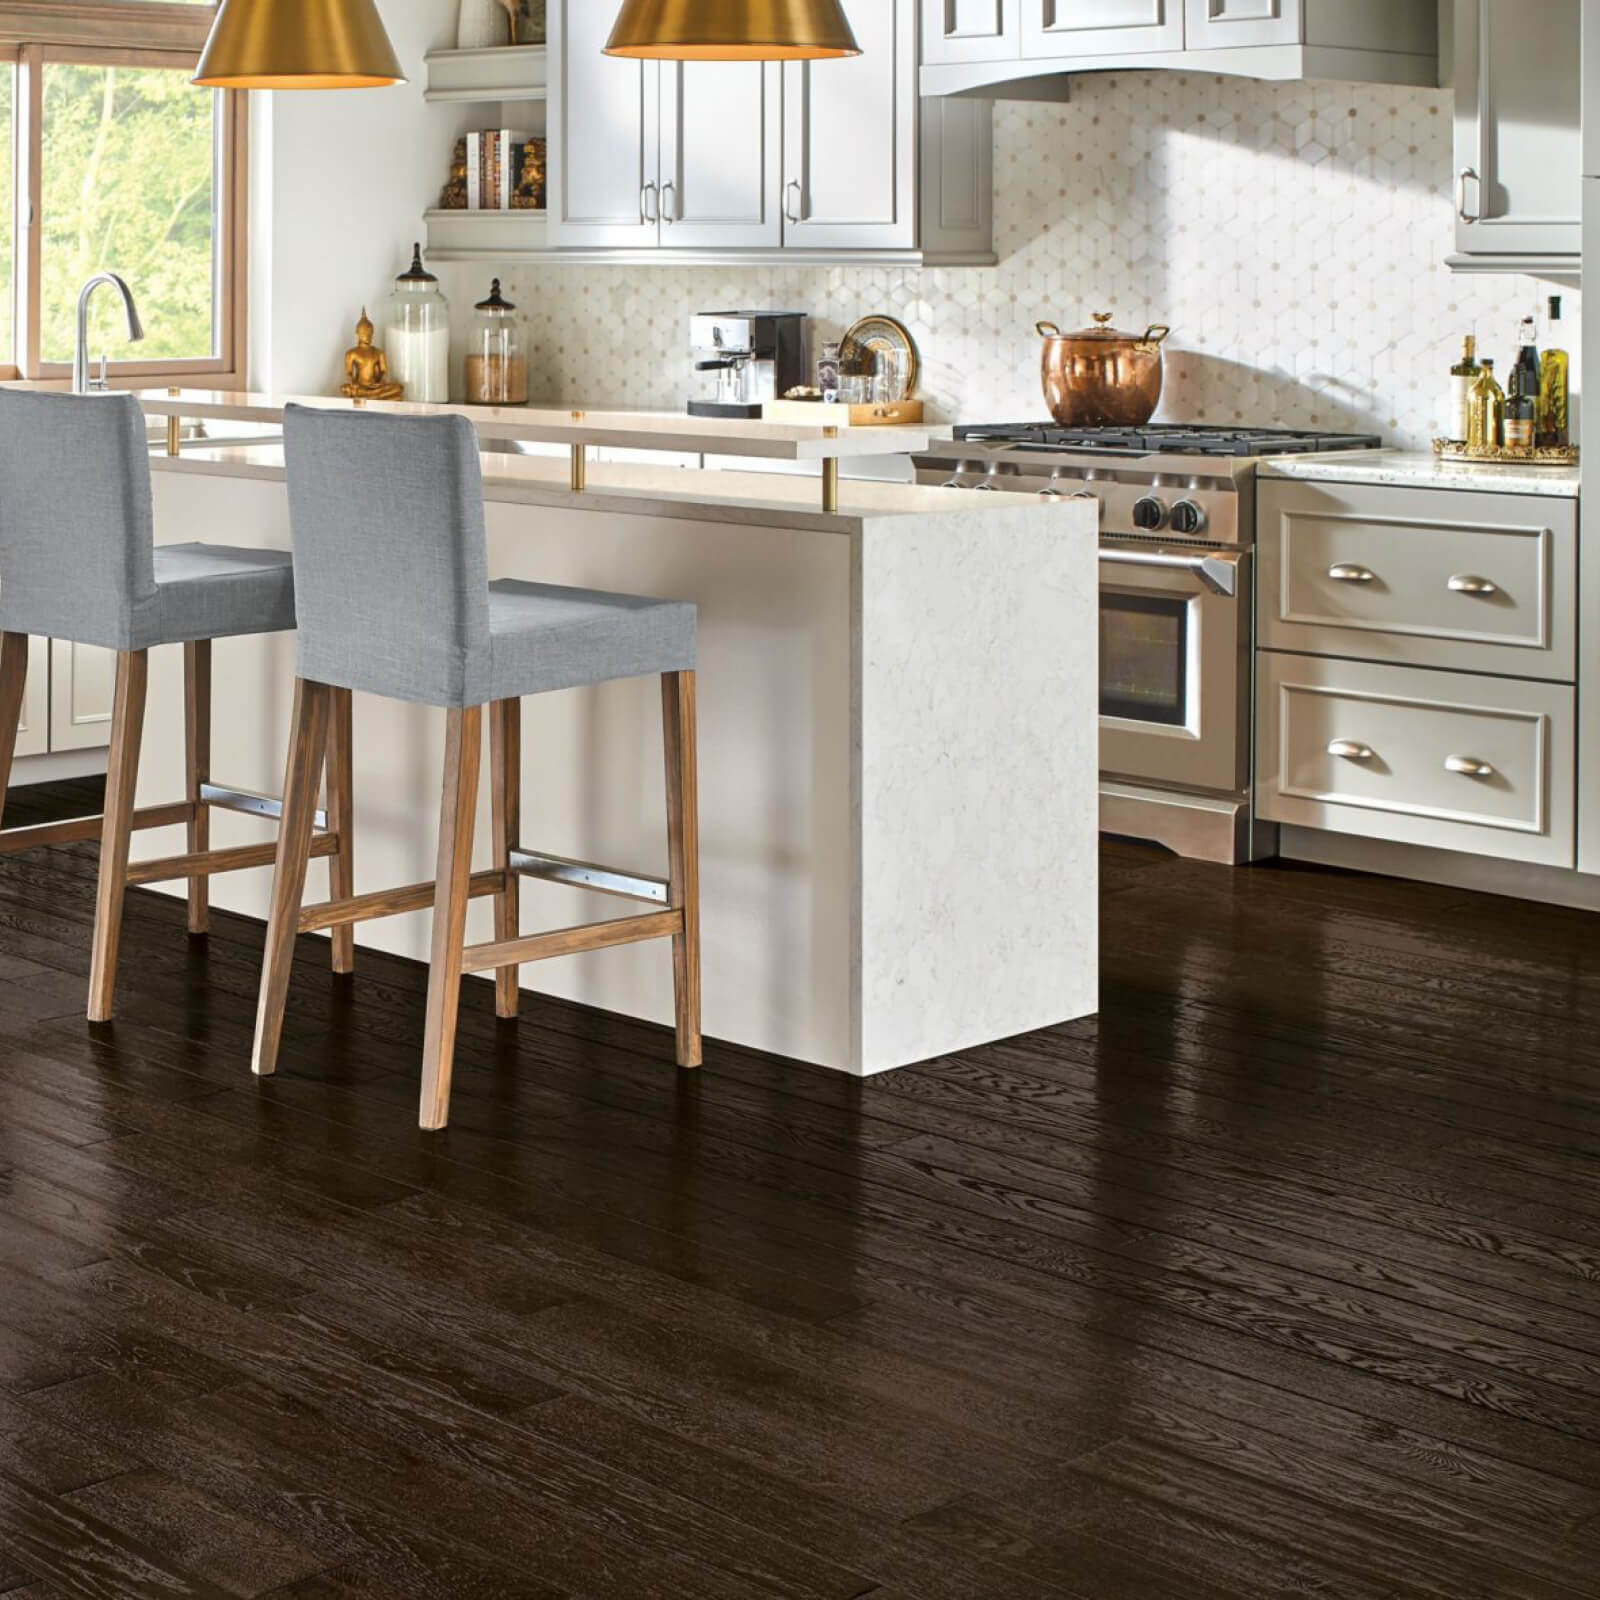 New kitchen with hardwood flooring | Design Waterville